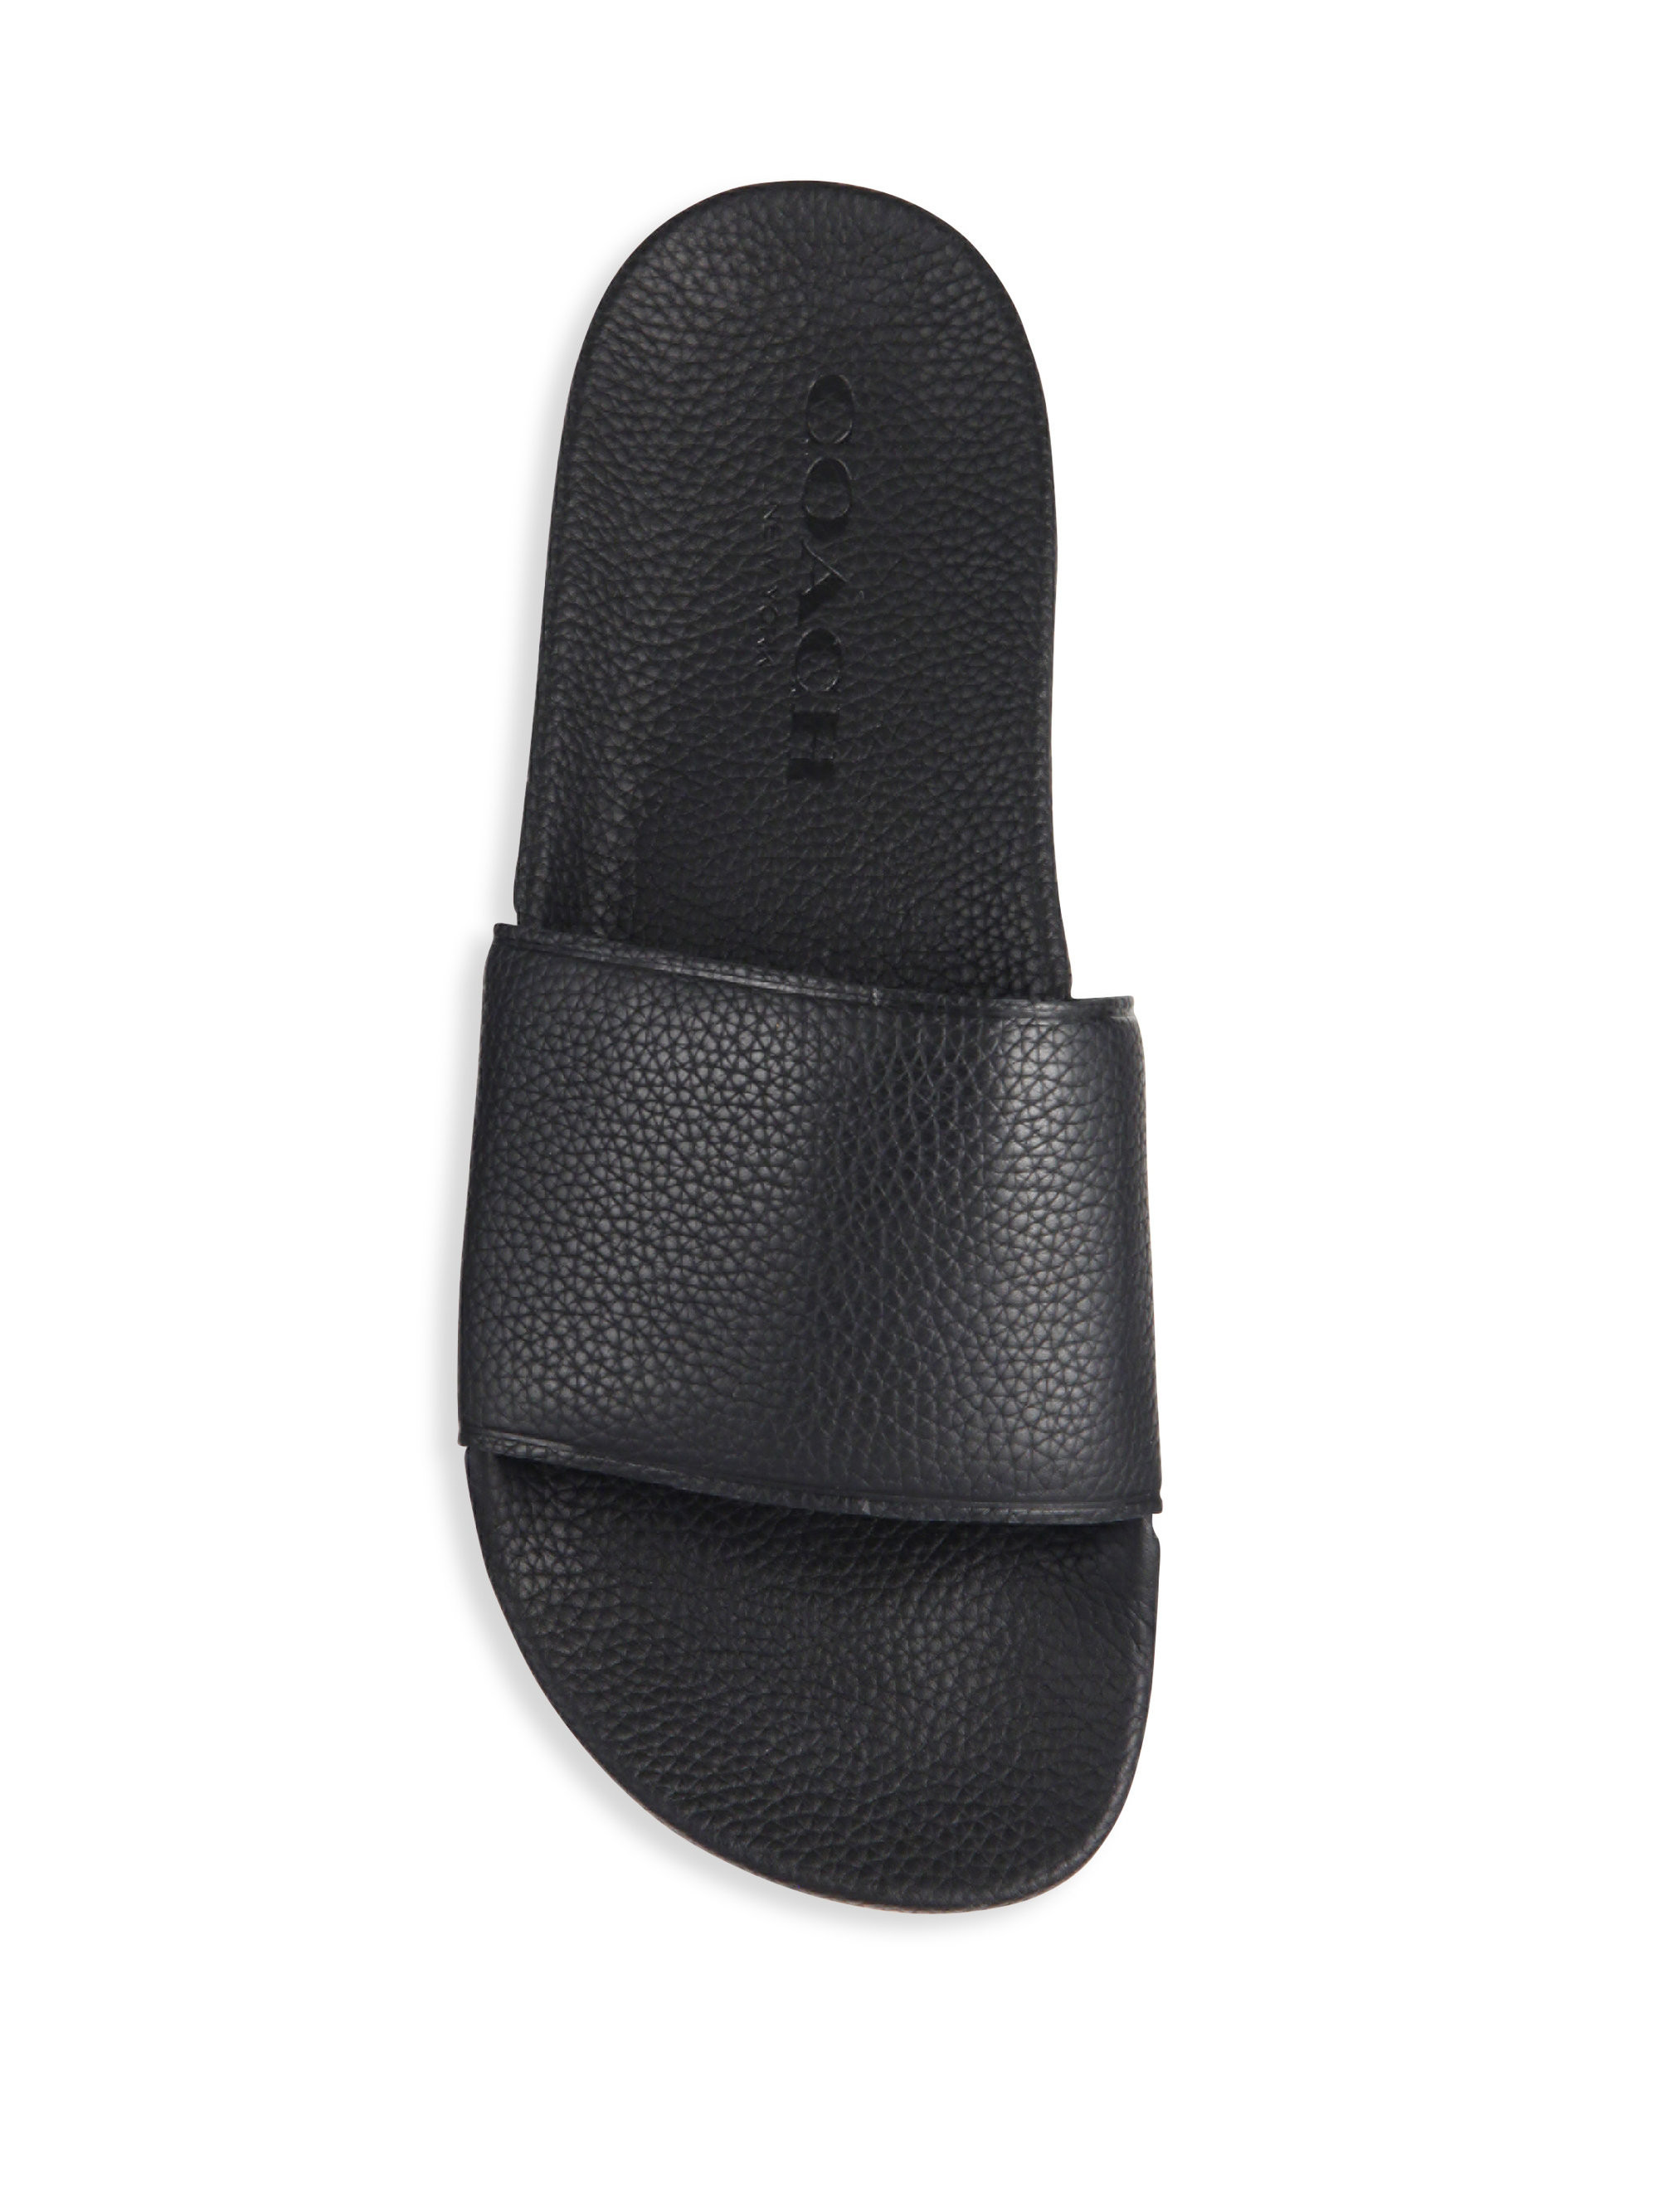 COACH Leather Textured Slide Sandal in Black for Men - Lyst